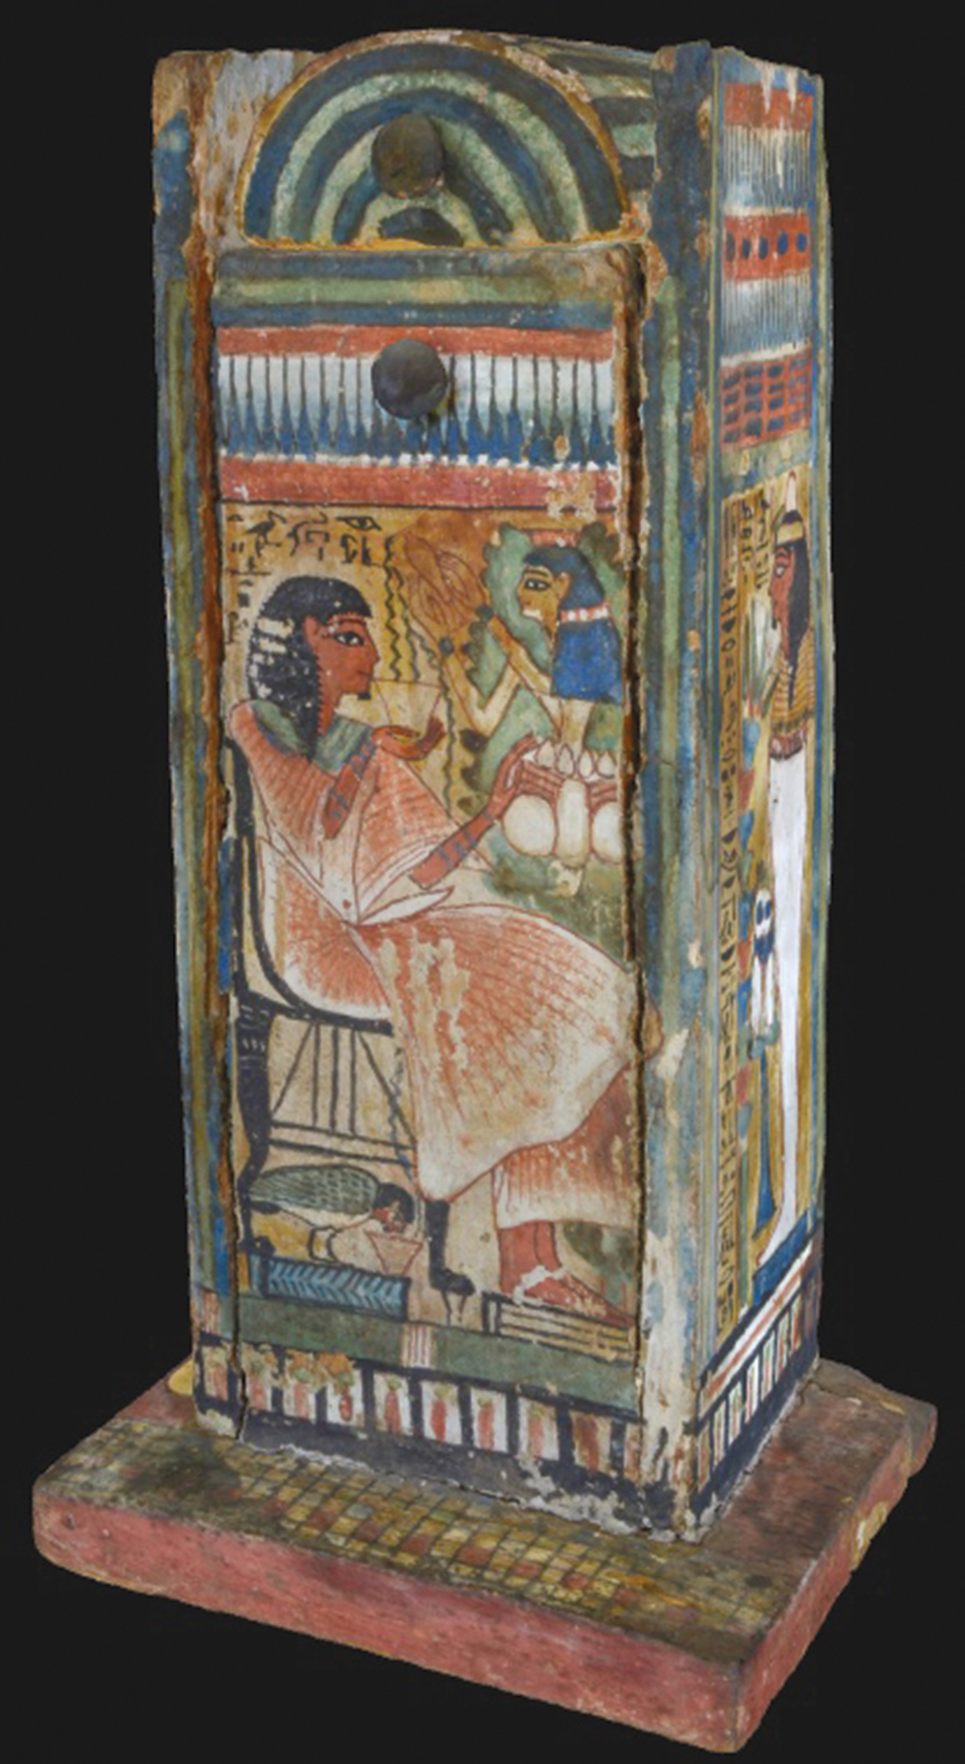 Artists Return Nefertiti Bust to Egypt Thanks to Covert 3-D Scanning